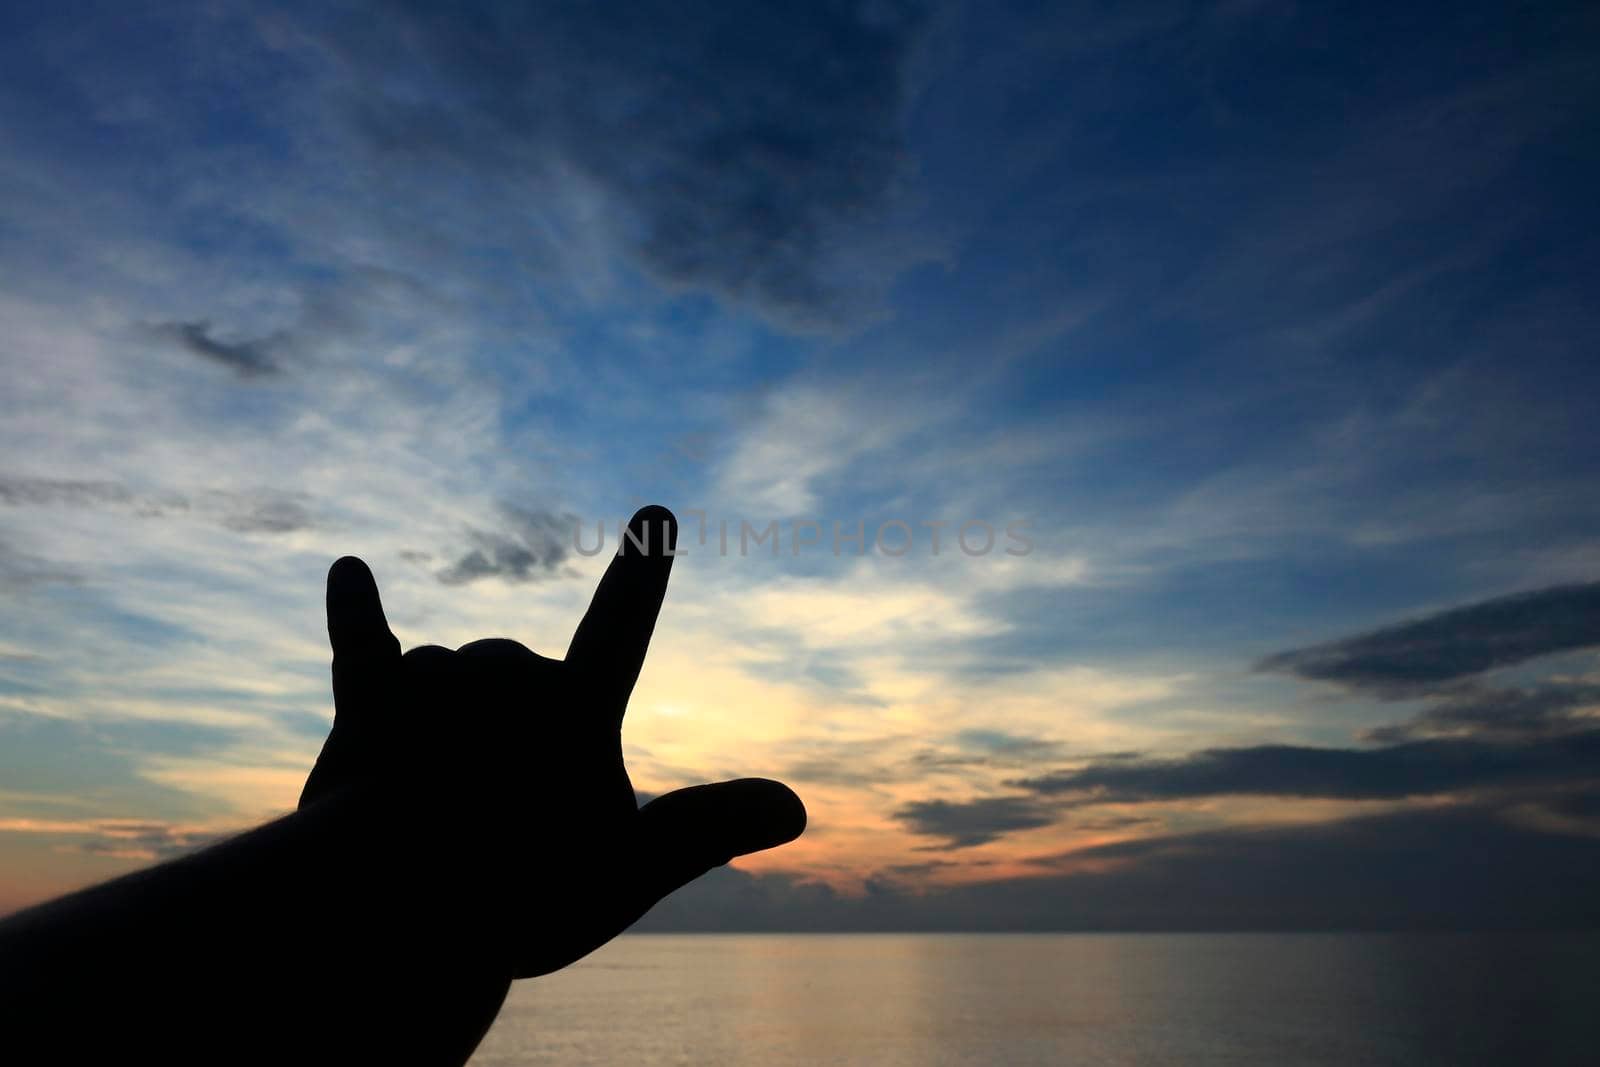 Silhouette raising 3 fingers thumb index finger little finger
It means "I Love You"